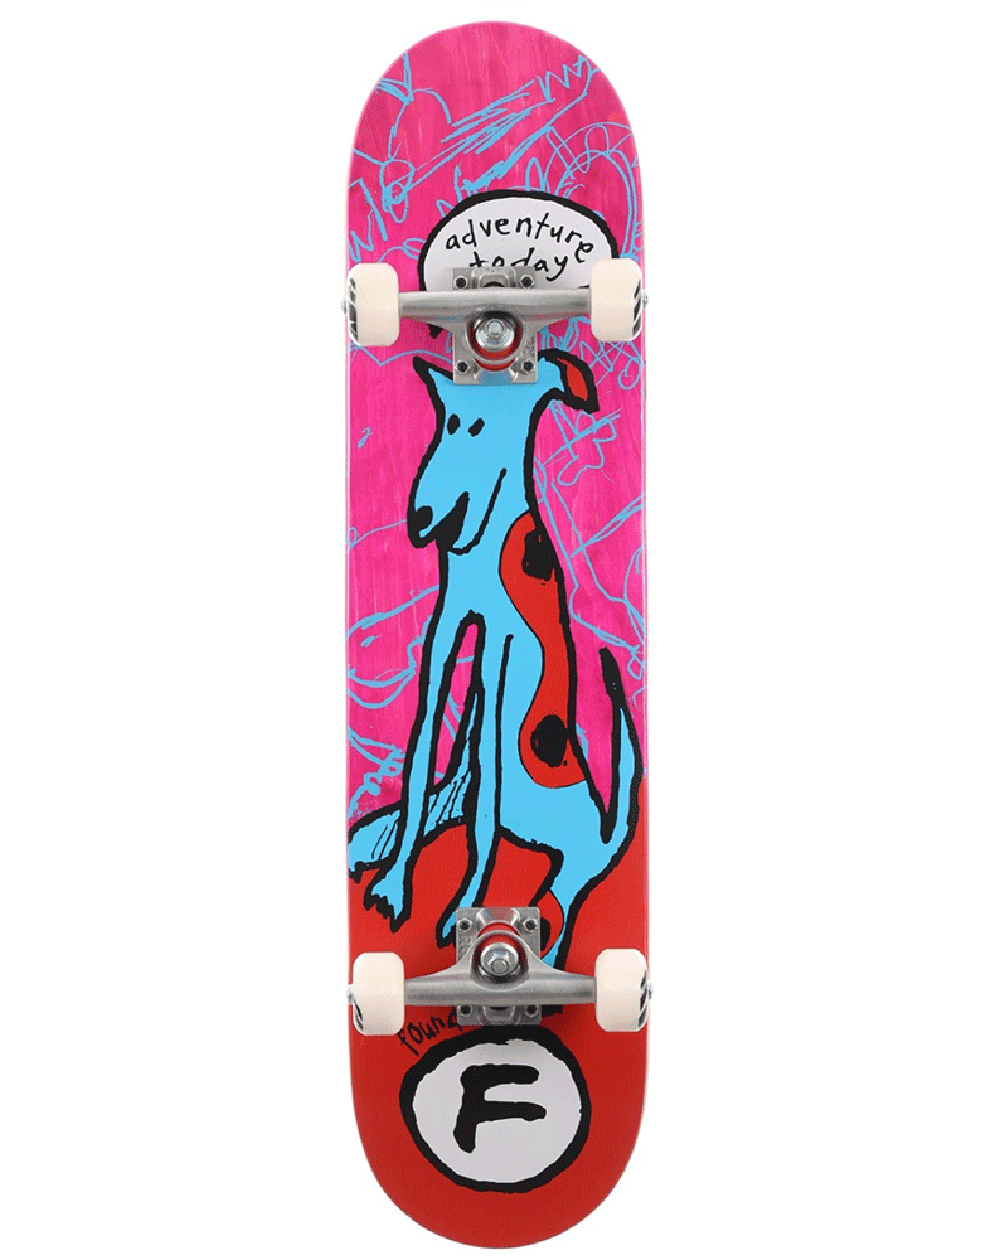 Foundation Skateboard Adventure 2020 7.75" Pink